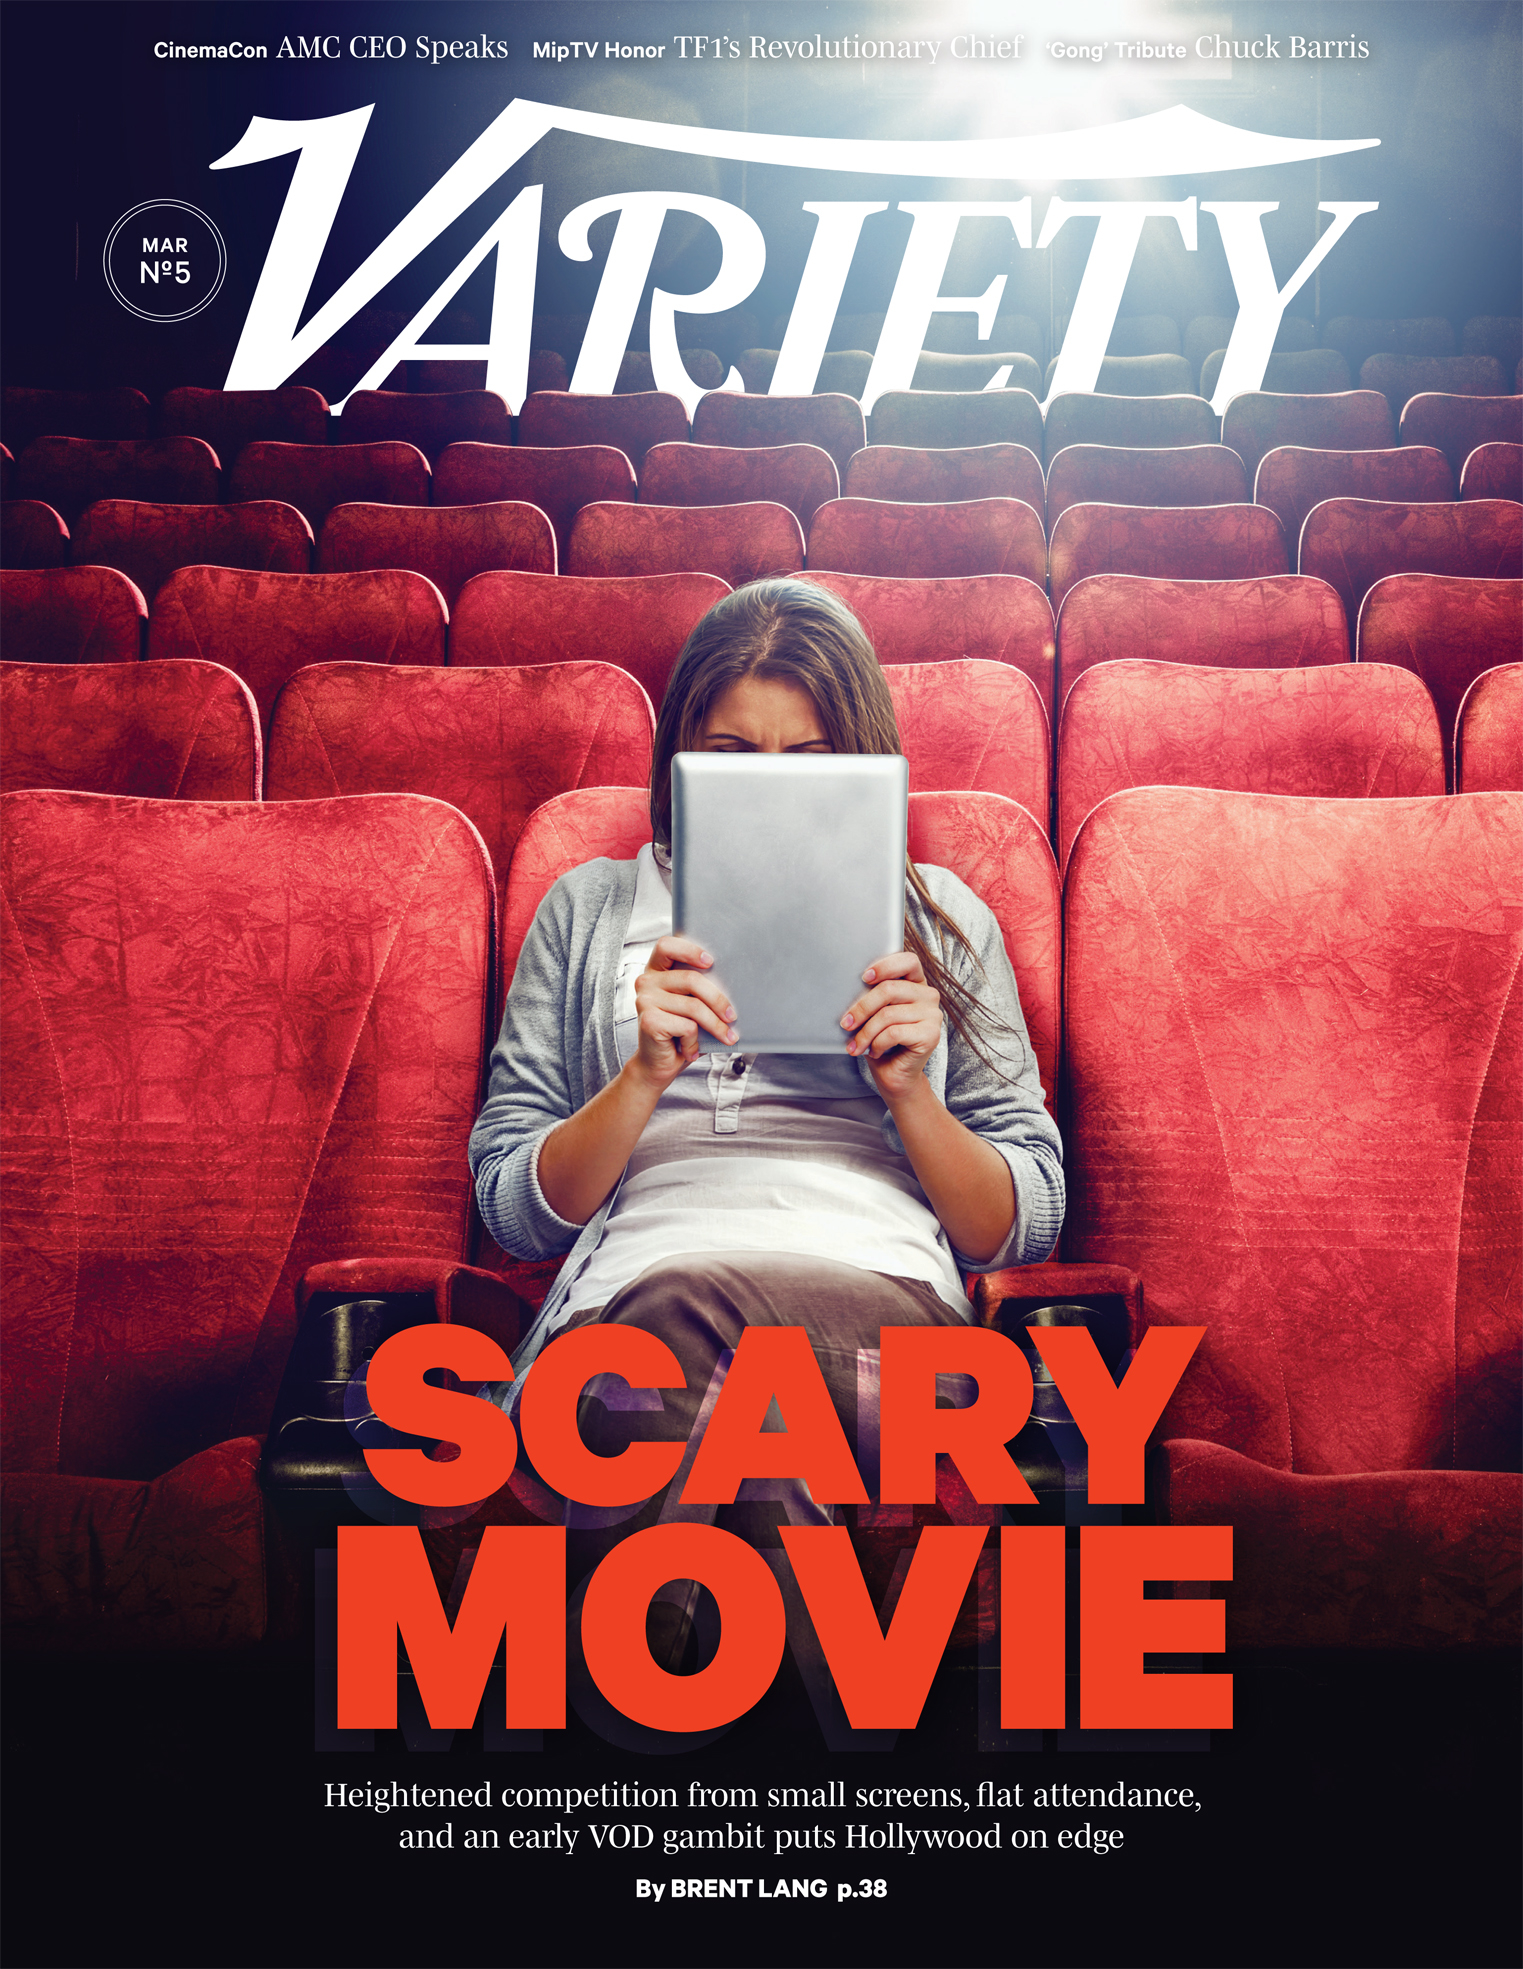 Variety_ScaryMovie_Cover.jpg